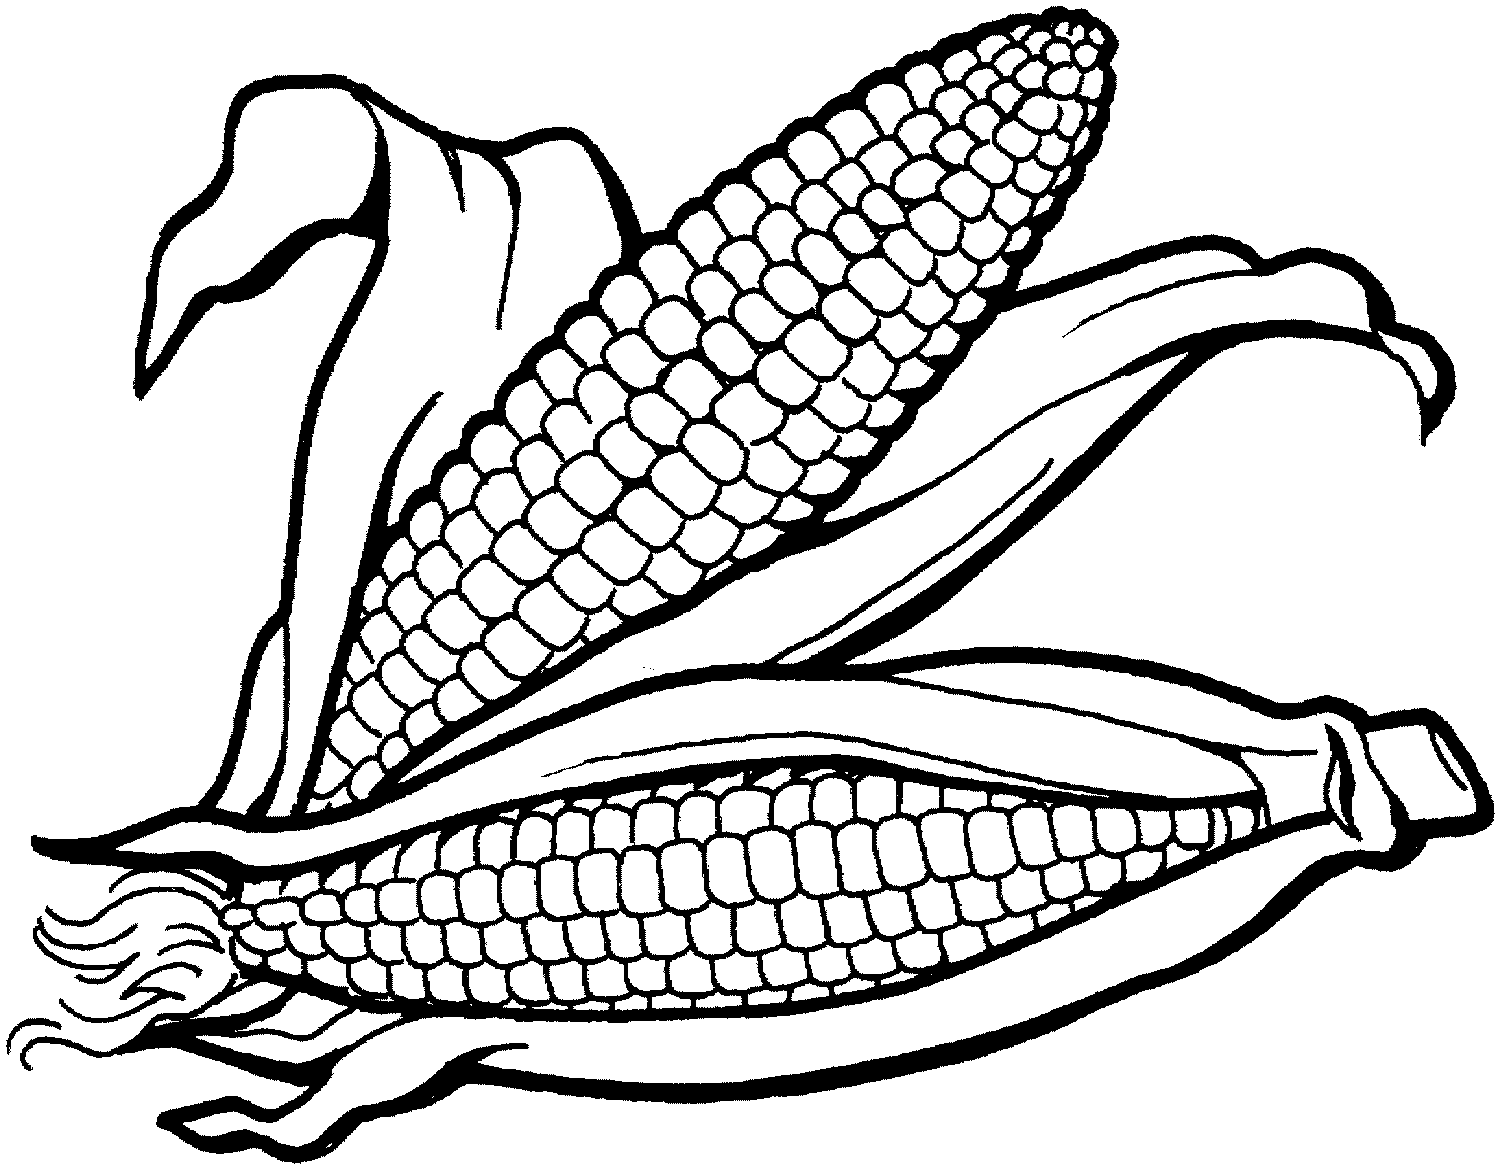 Corn Clipart Black And White  - Indian Corn Clipart